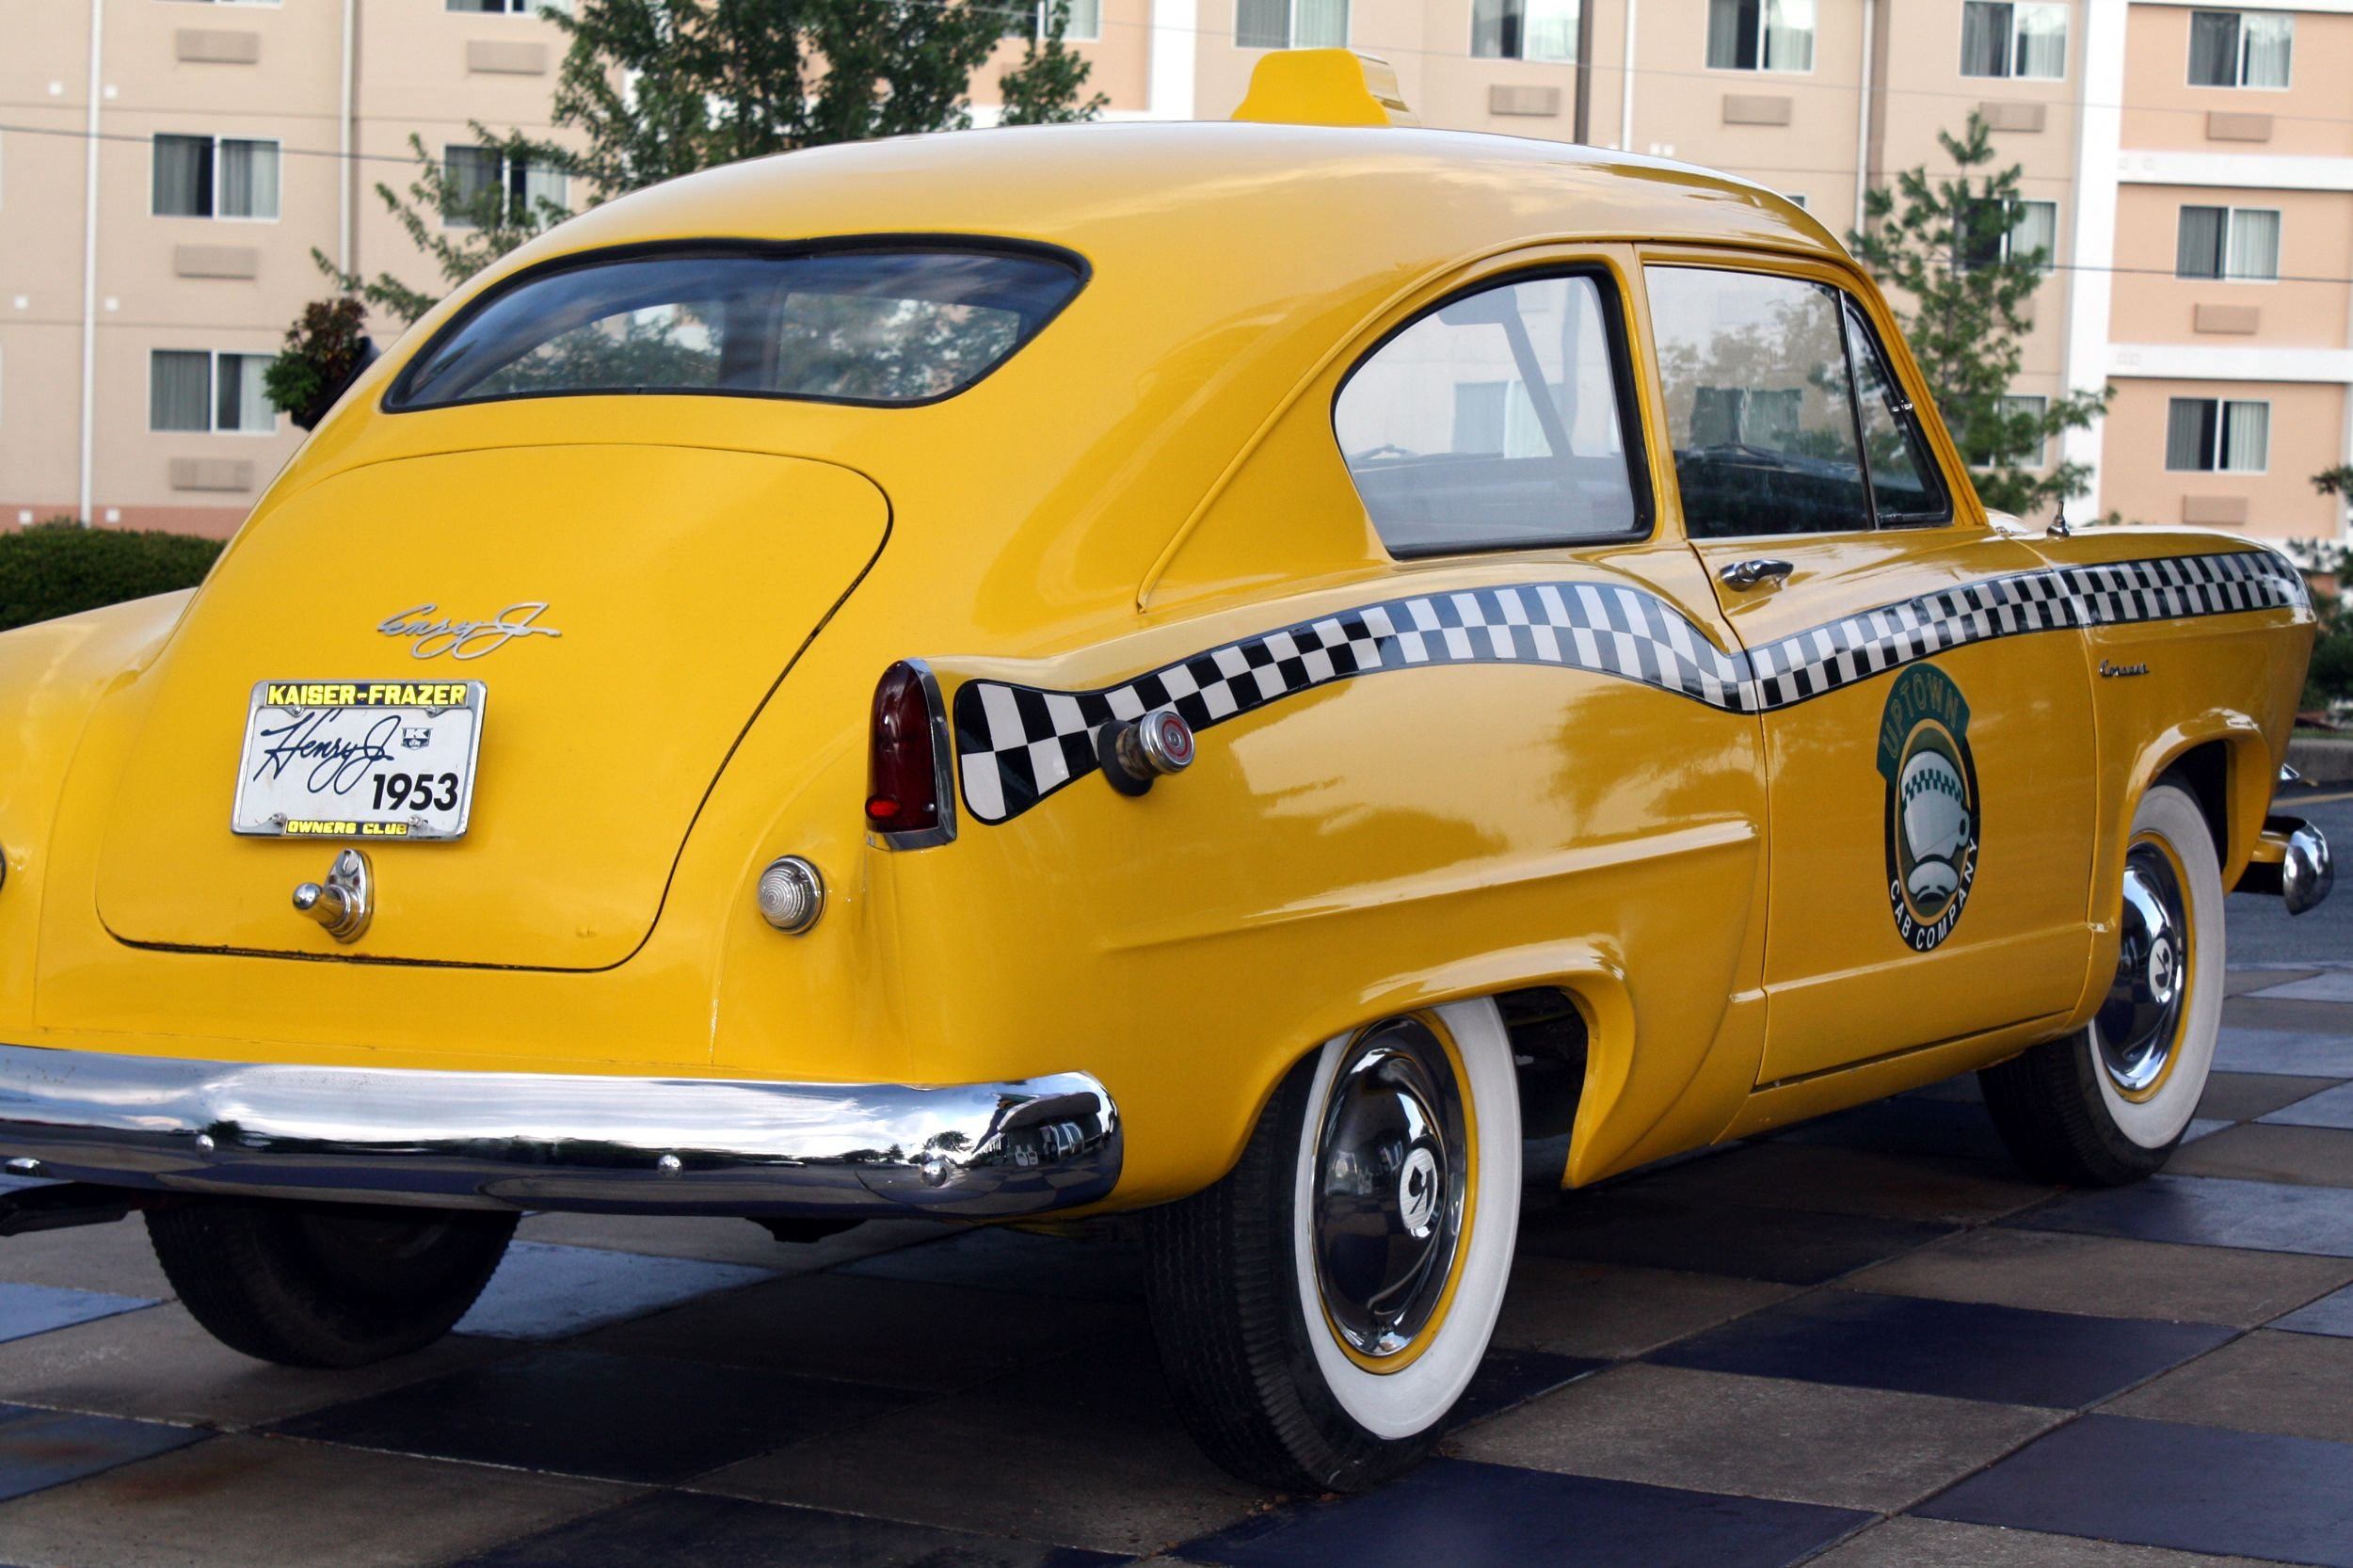 Старый таксопарк. Ford 1950 Yellow Cab Taxi. Еллоу КЭБ такси. Taxi Cab 50s. Yellow Cab 40-s.